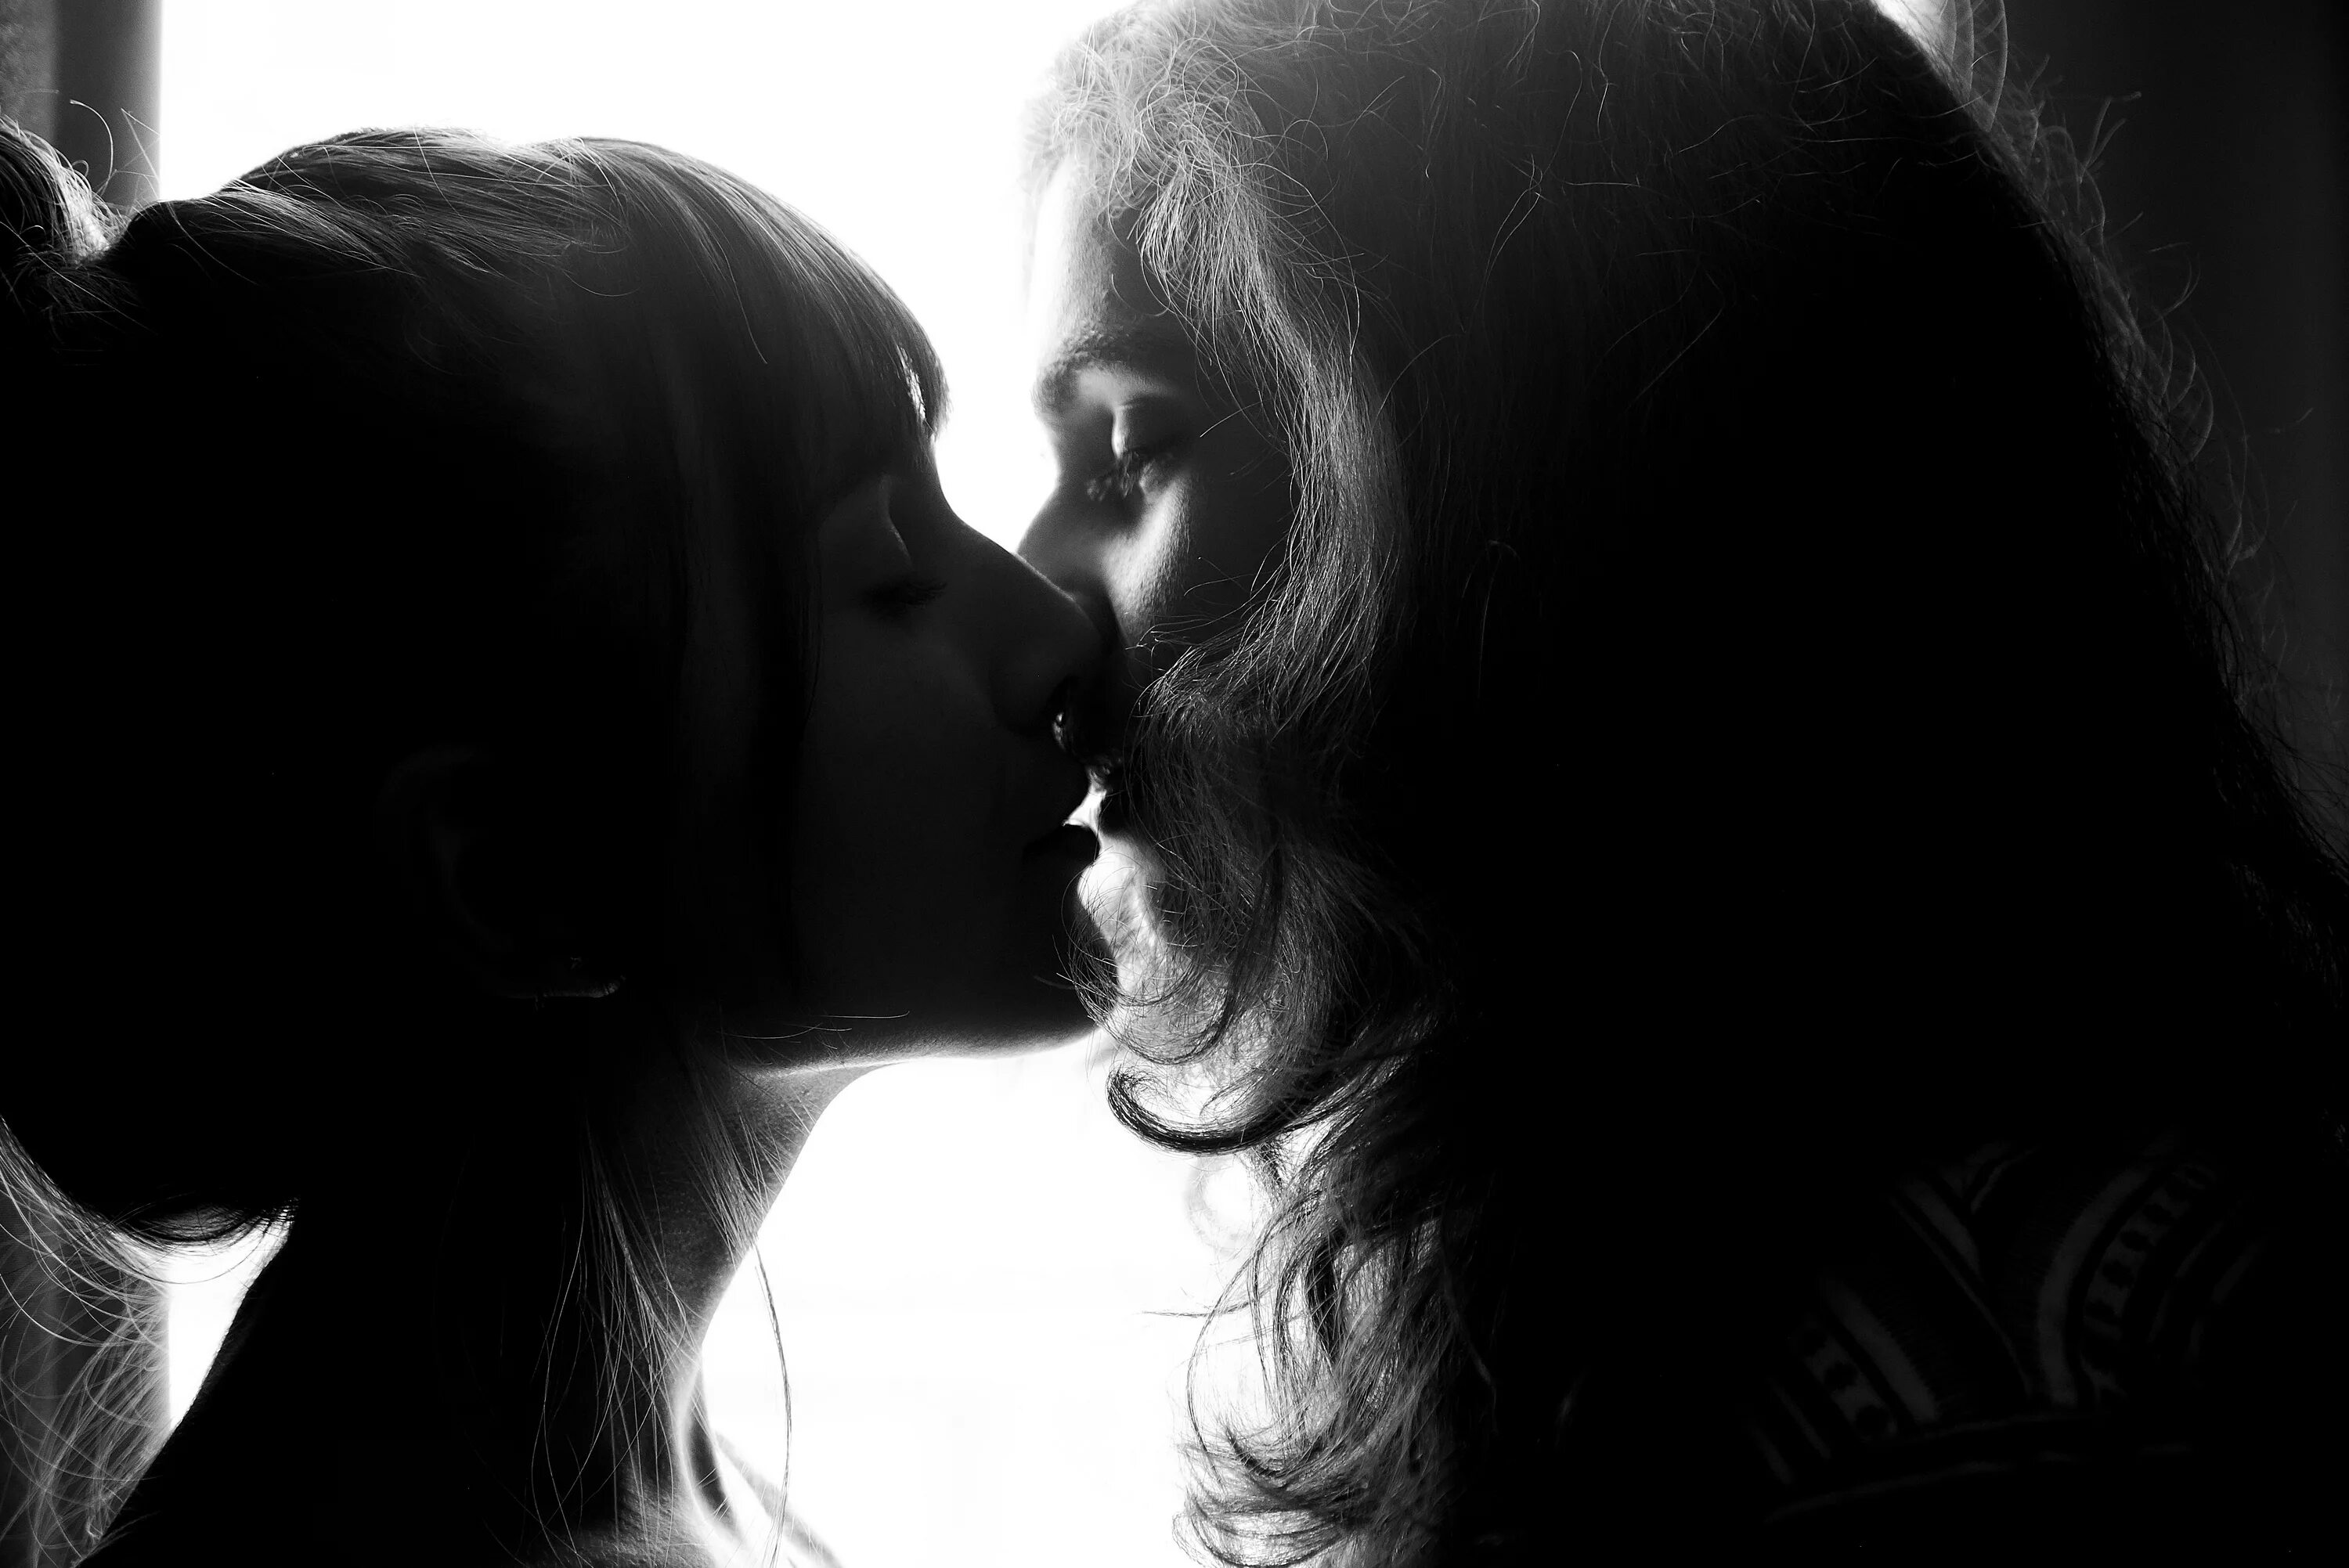 Lesbi face. Две девушки любовь. Поцелуй девушек. Поцелуй двух девушек. Красивый поцелуй.